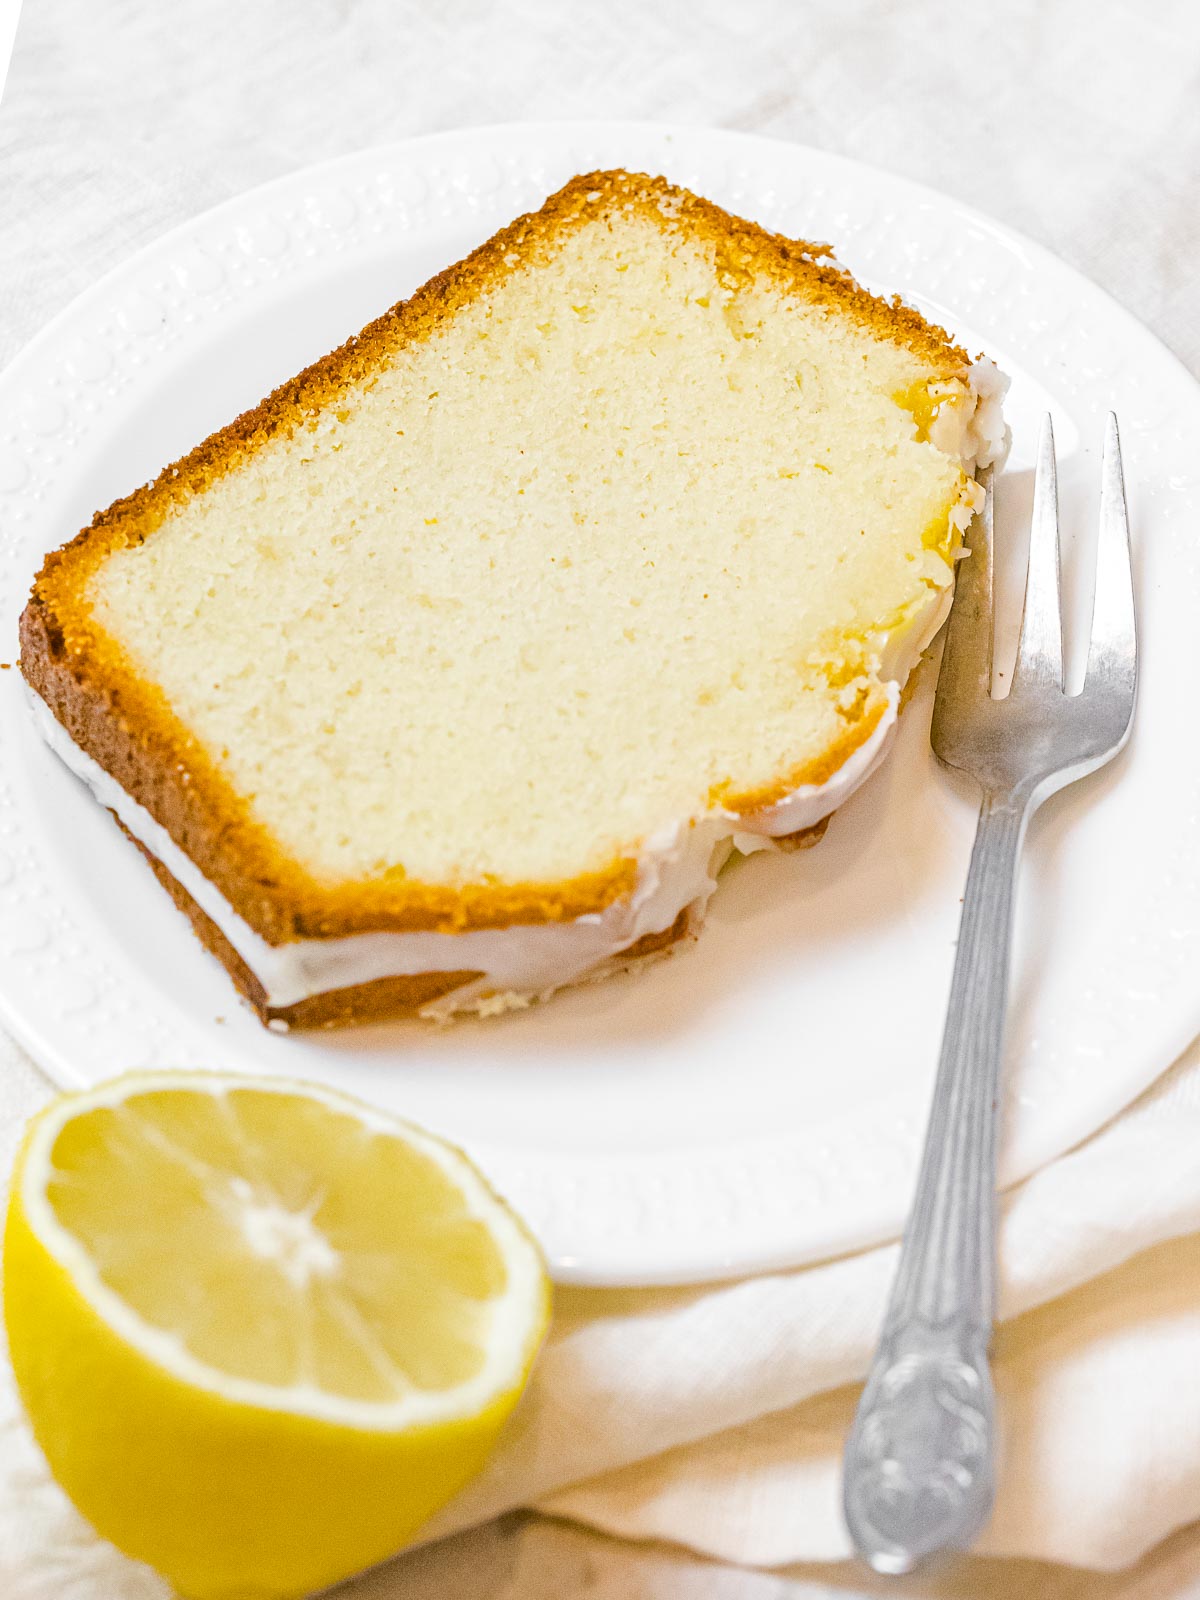 slice of lemon pound cake on a white plate next to a fork and half a lemon